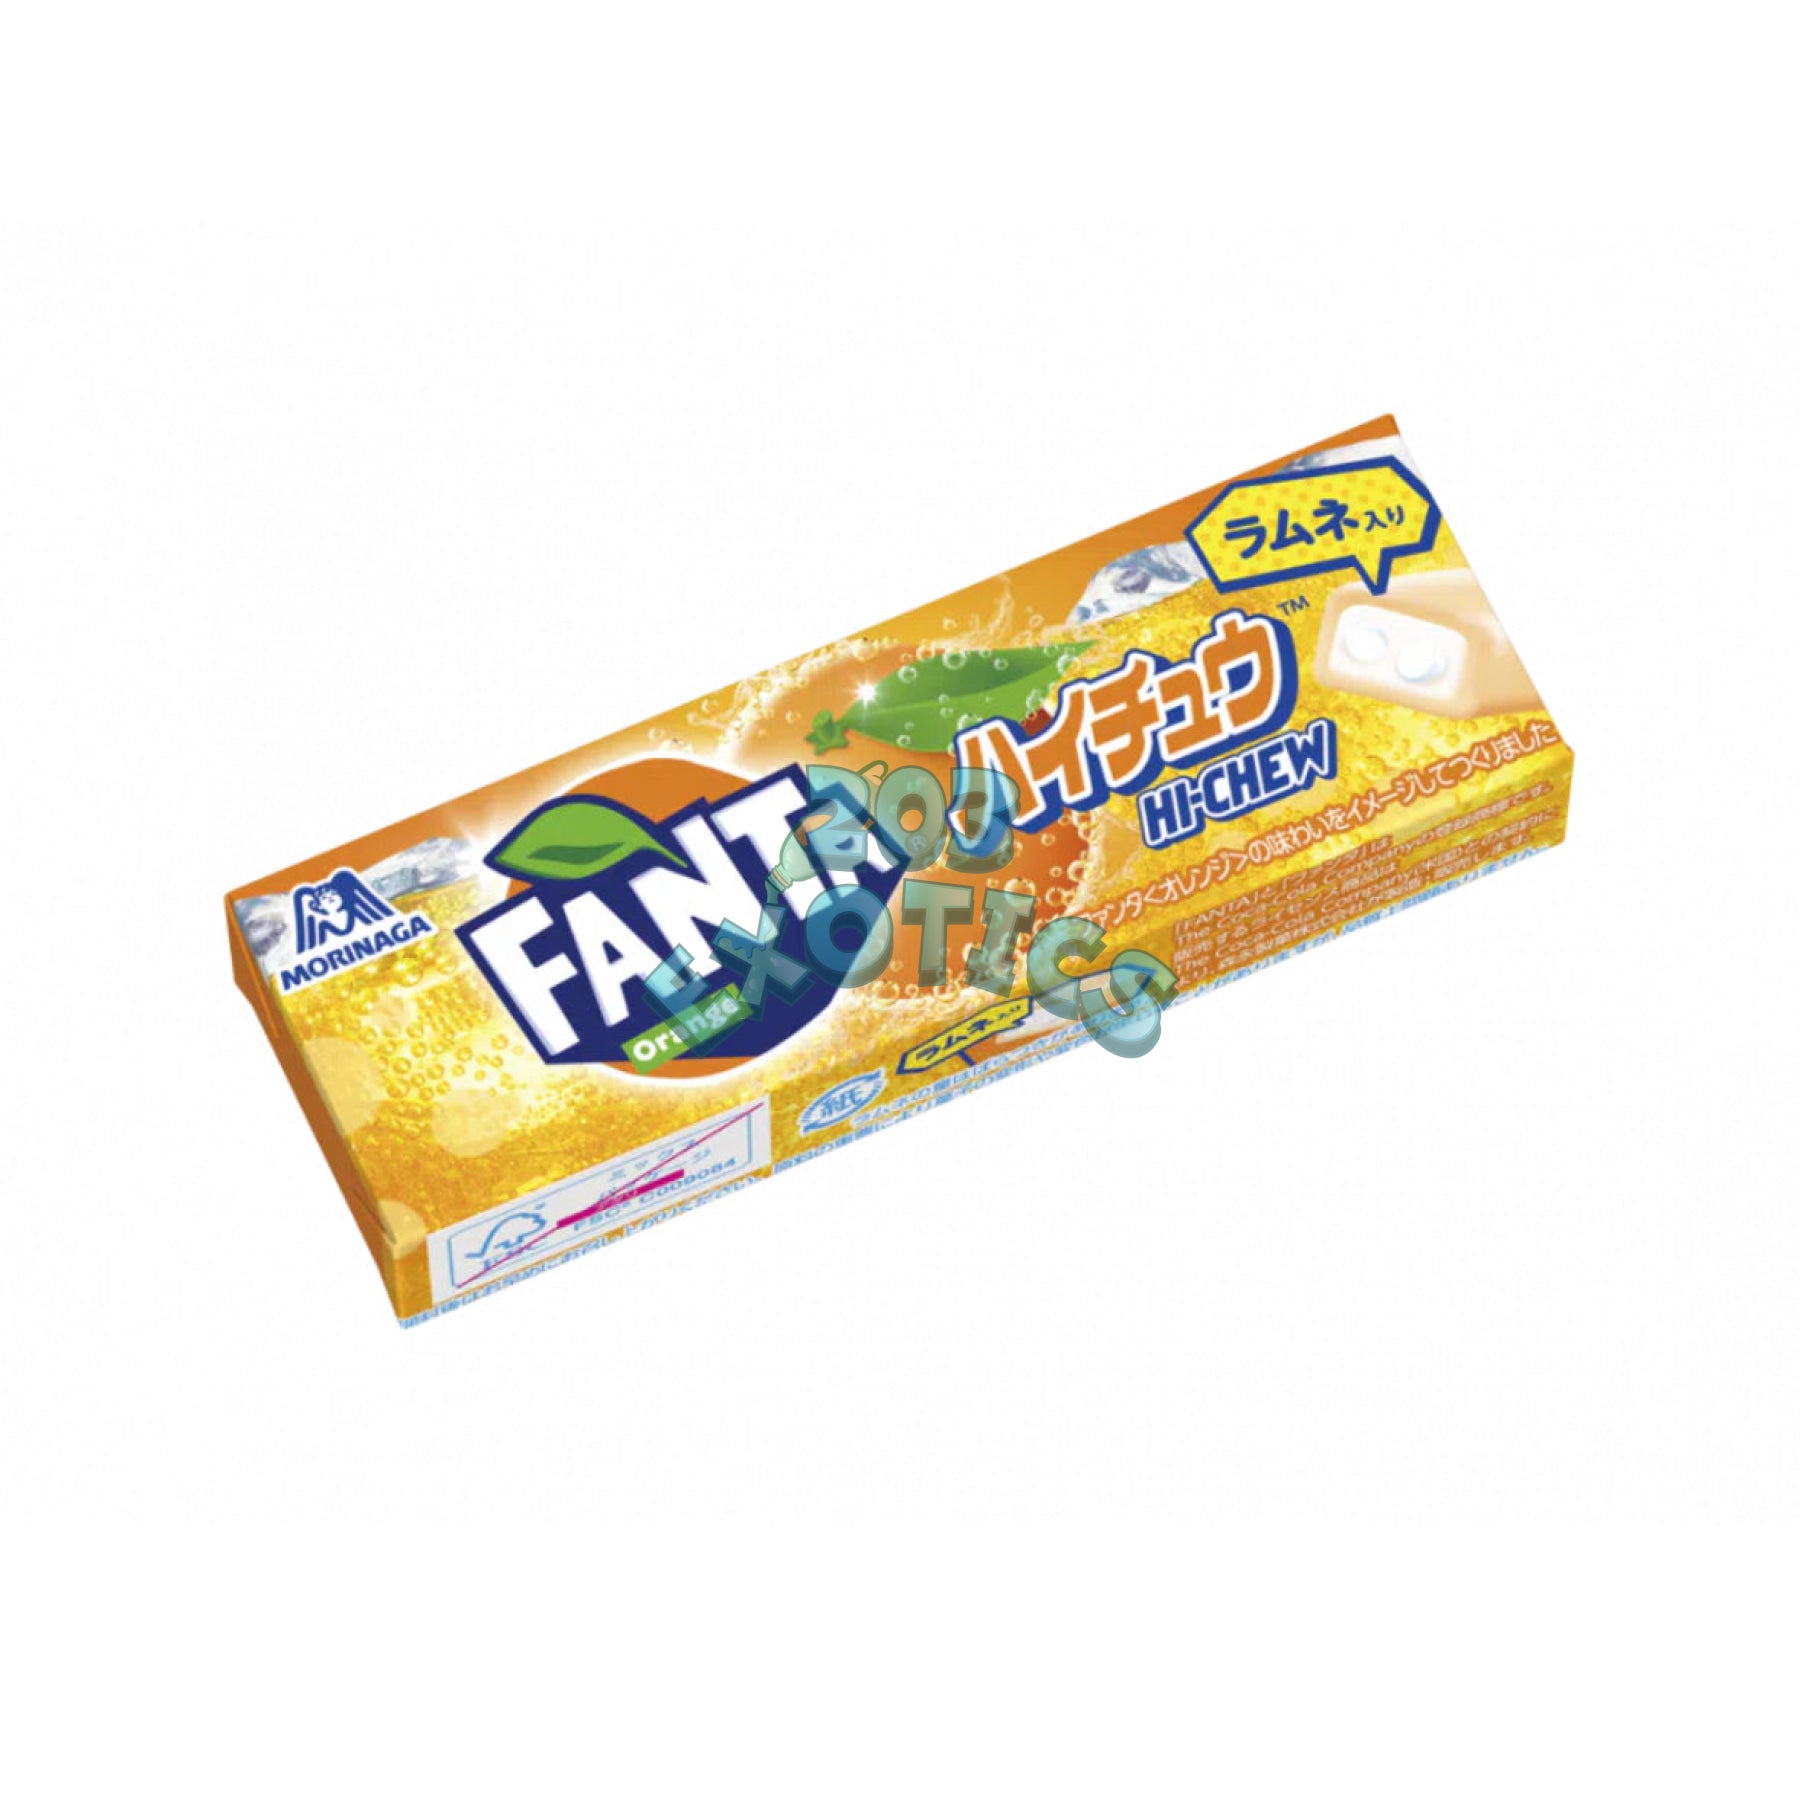 Hi-Chew Fanta Orange (Japanese Version) (7Ct) Candy